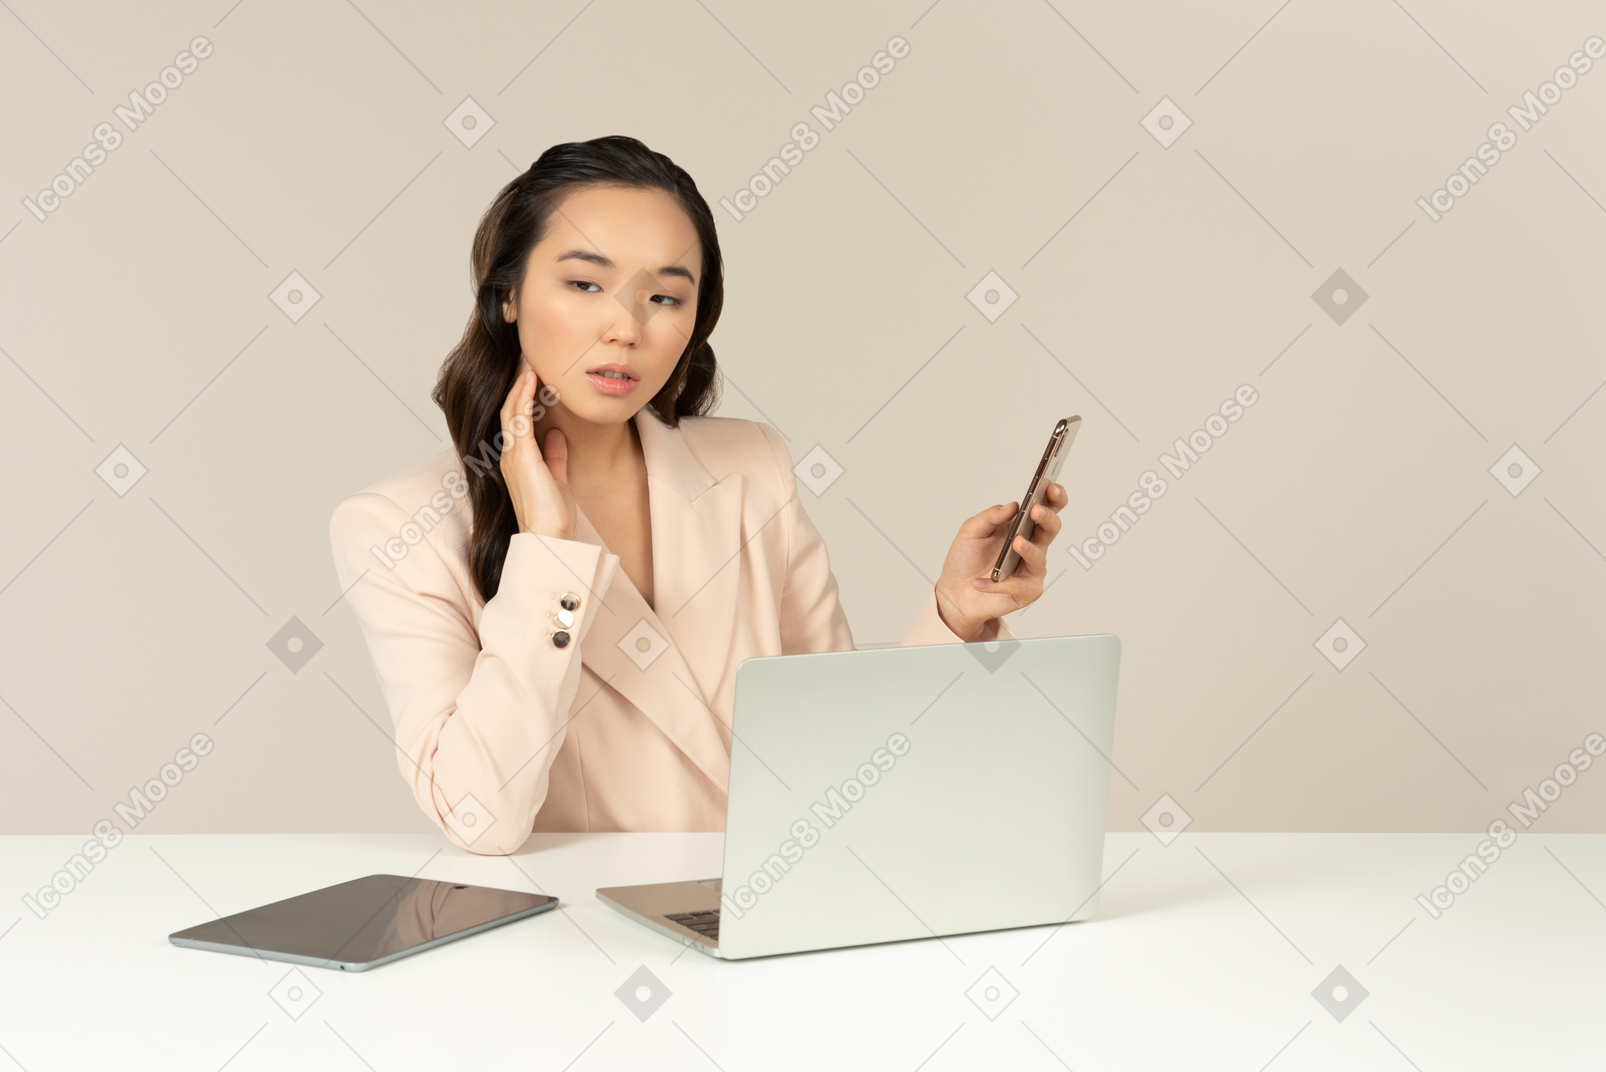 Empleado de oficina femenino asiático comprobando teléfono